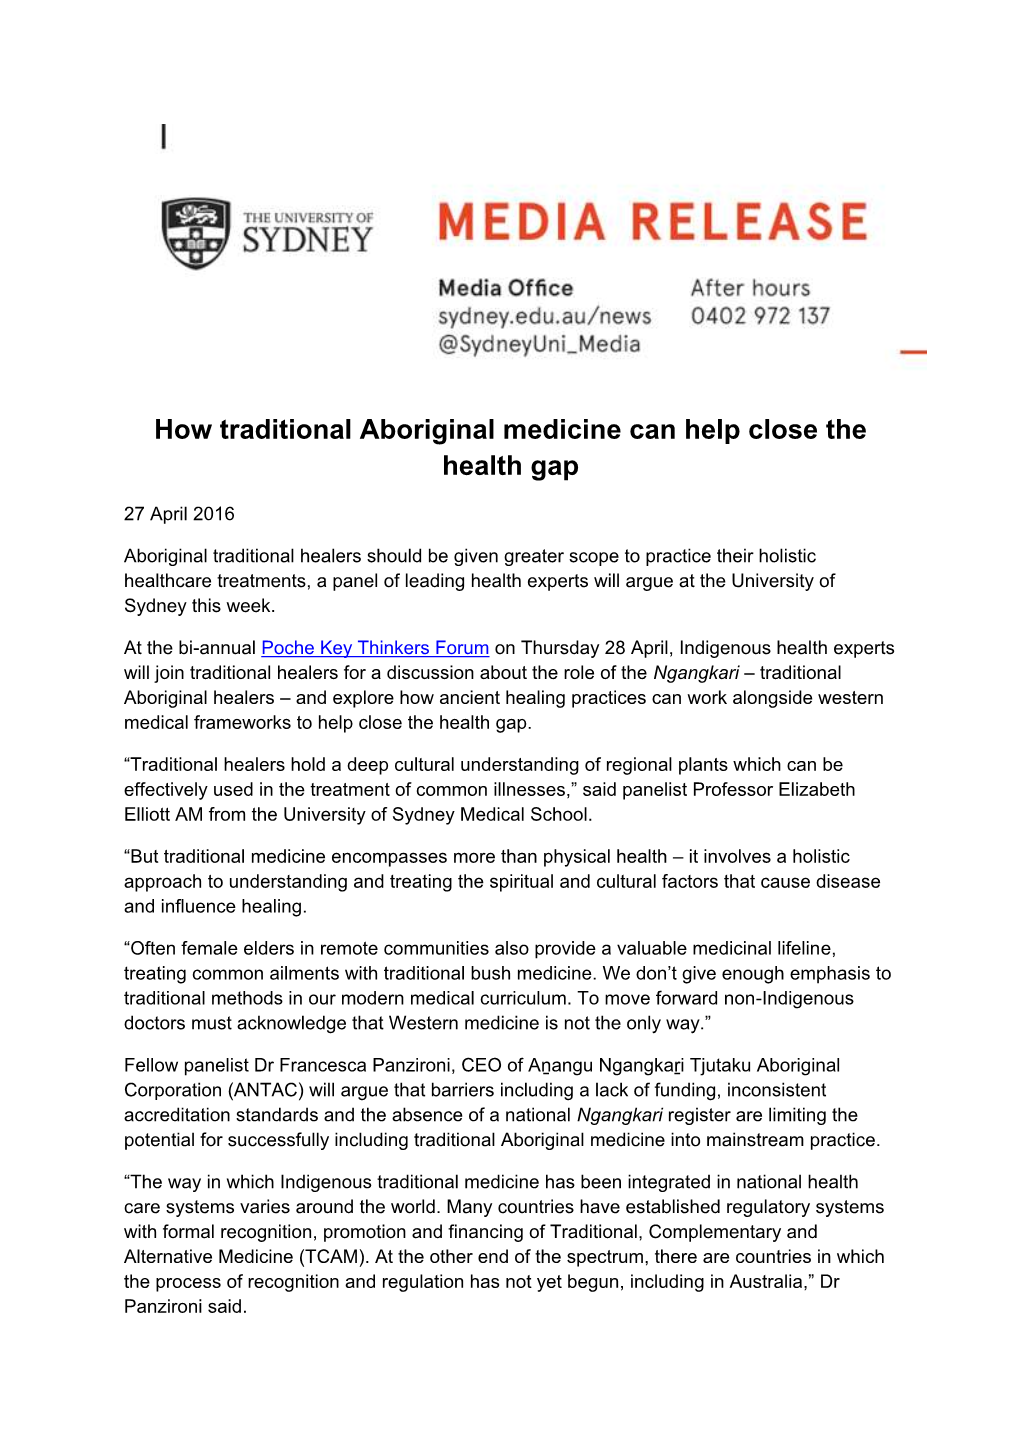 How Traditional Aboriginal Medicine Can Help Close the Health Gap